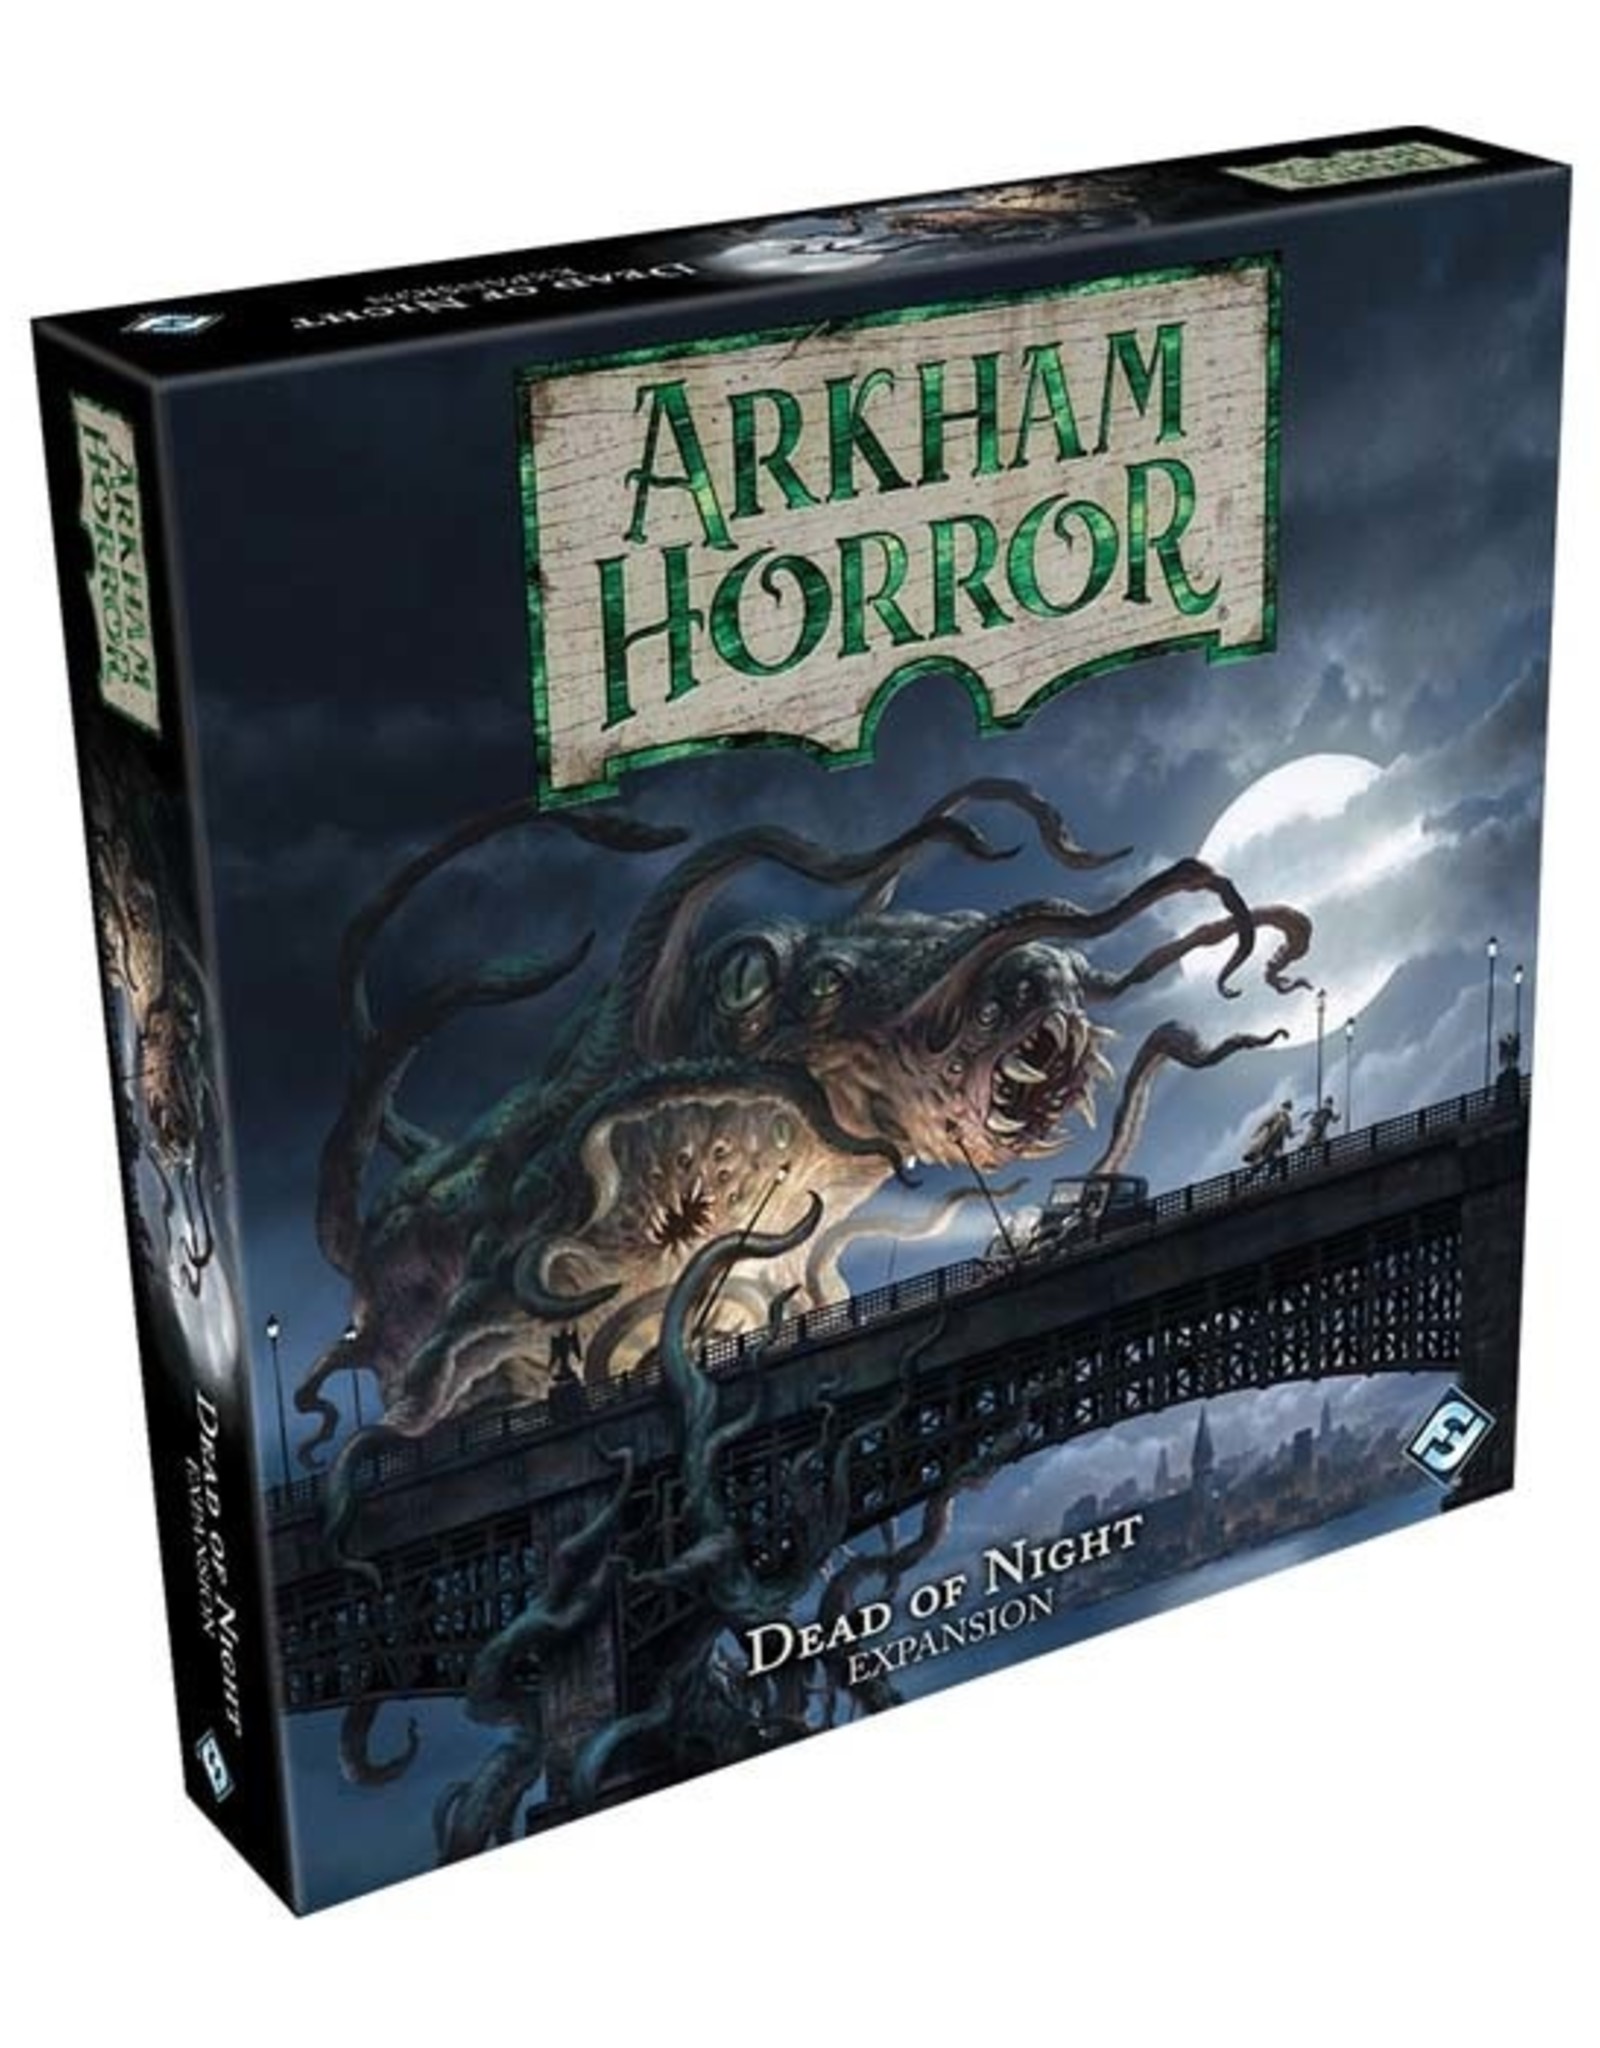 Arkham Horror Arkham Horror: 3rd Edition - Dead of Night Expansion